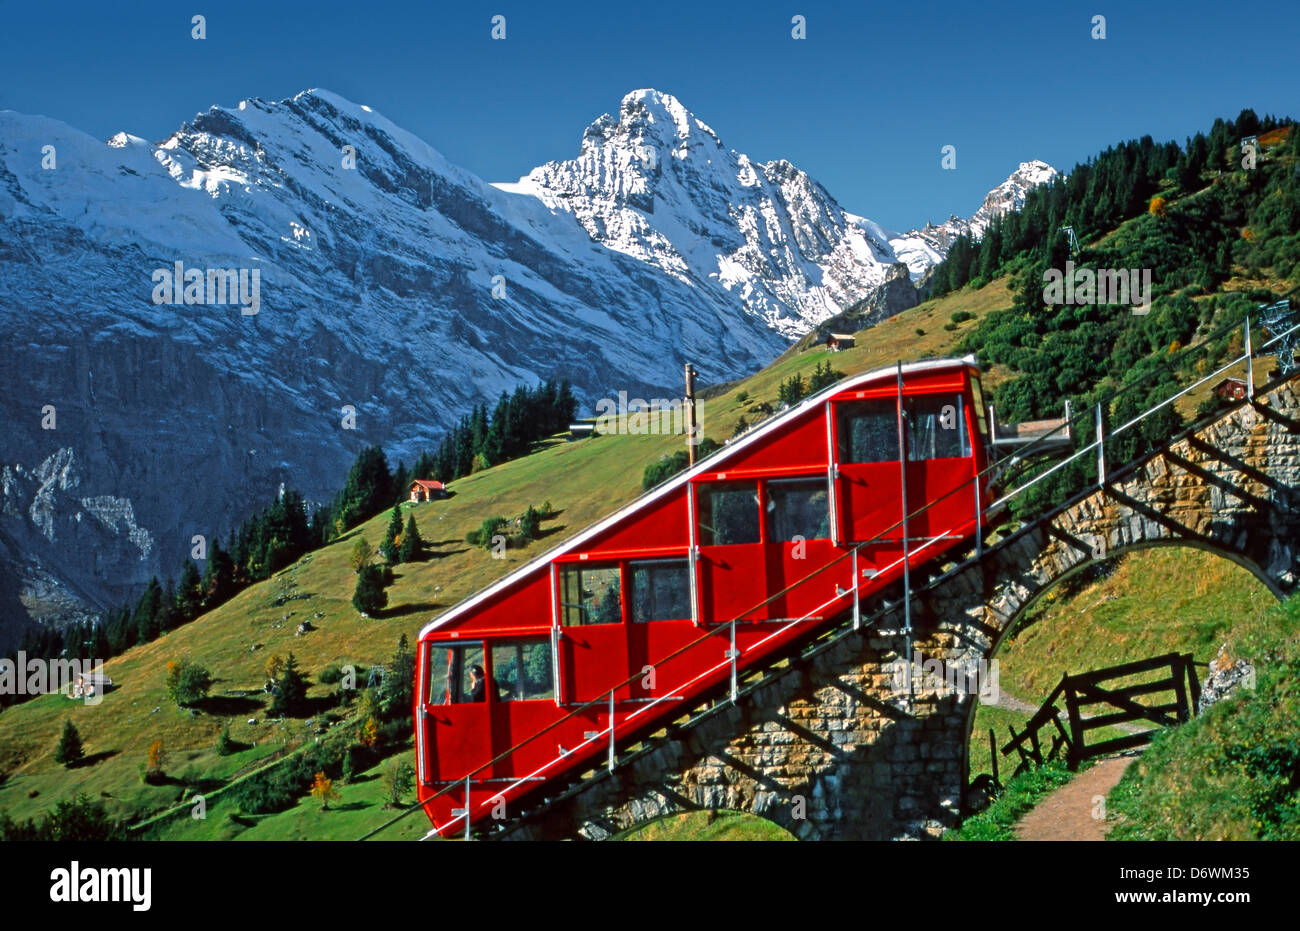 Tram on slanted tracks with the Gspaltenhorn in background, Allmendhubelbahn above Murren, Switzerland Stock Photo